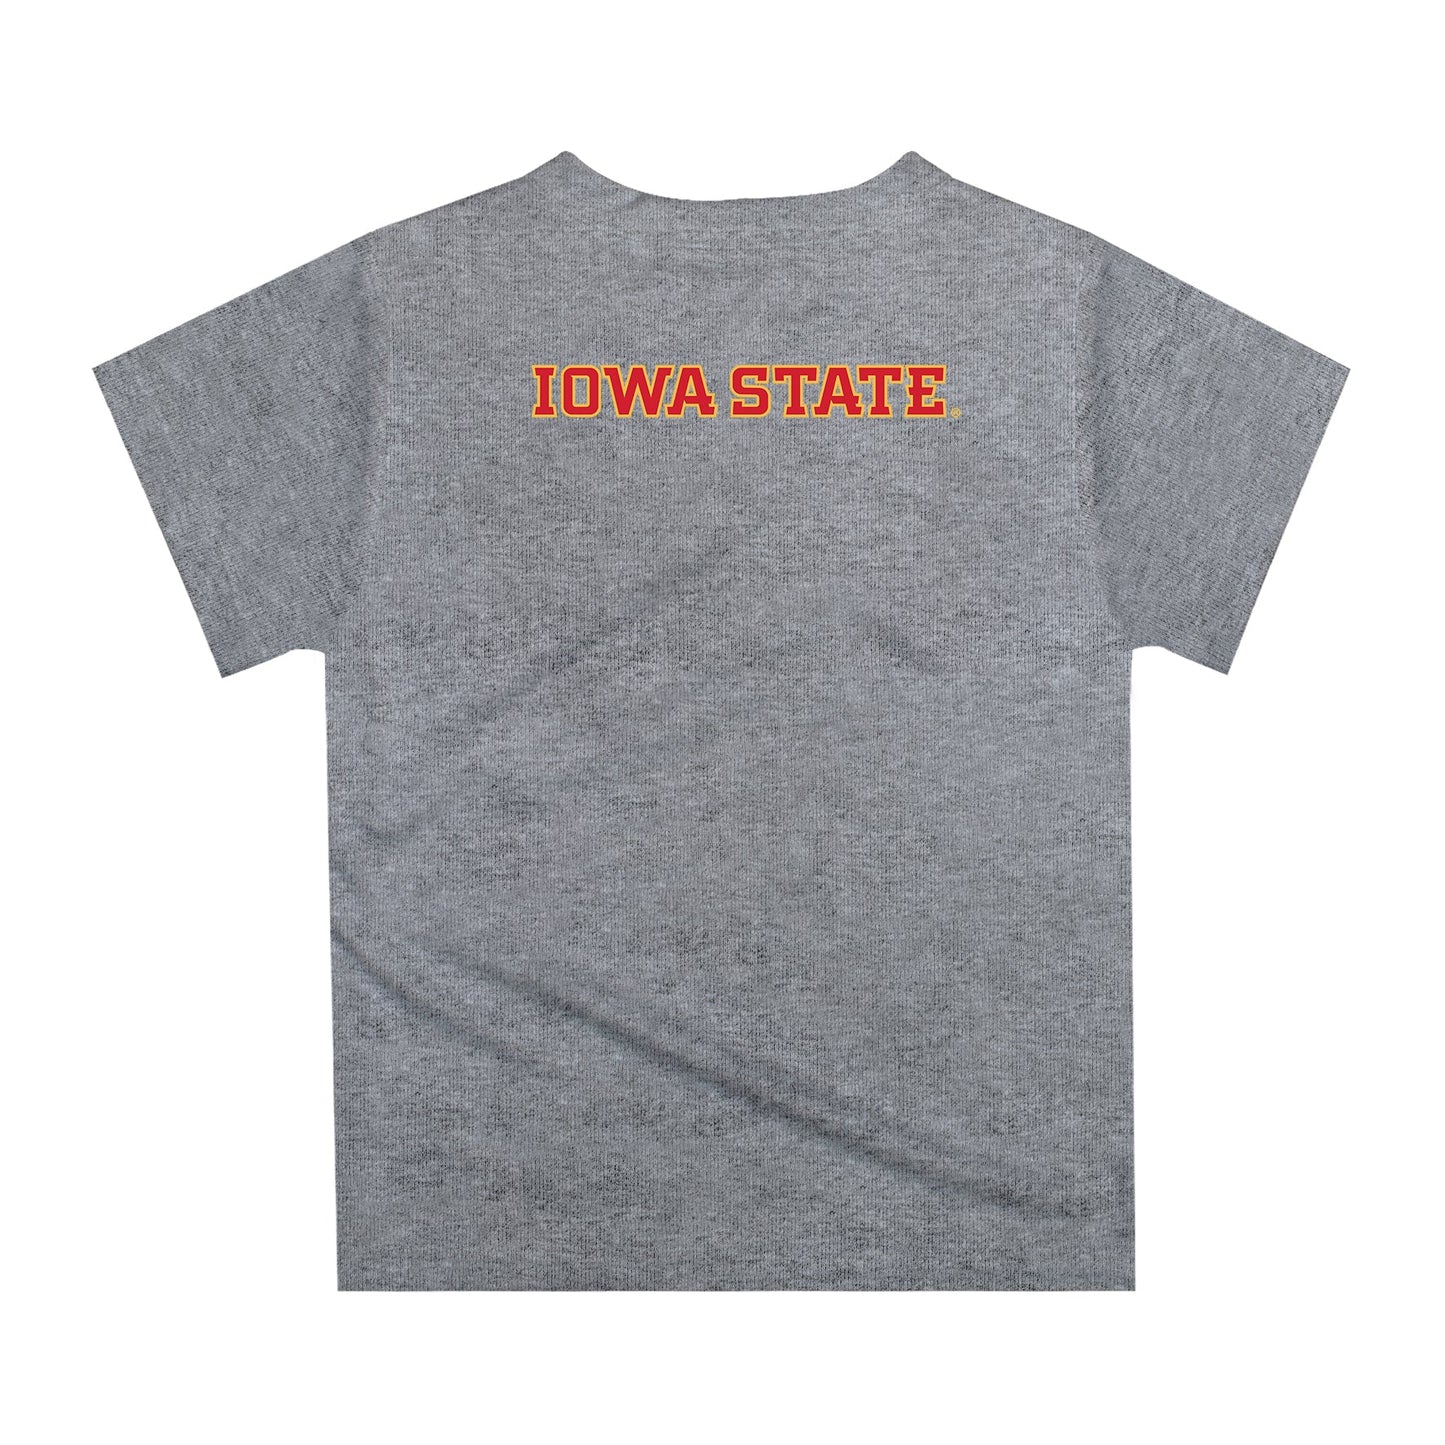 Iowa State Cyclones ISU Original Dripping Football Helmet Heather Gray T-Shirt by Vive La Fete